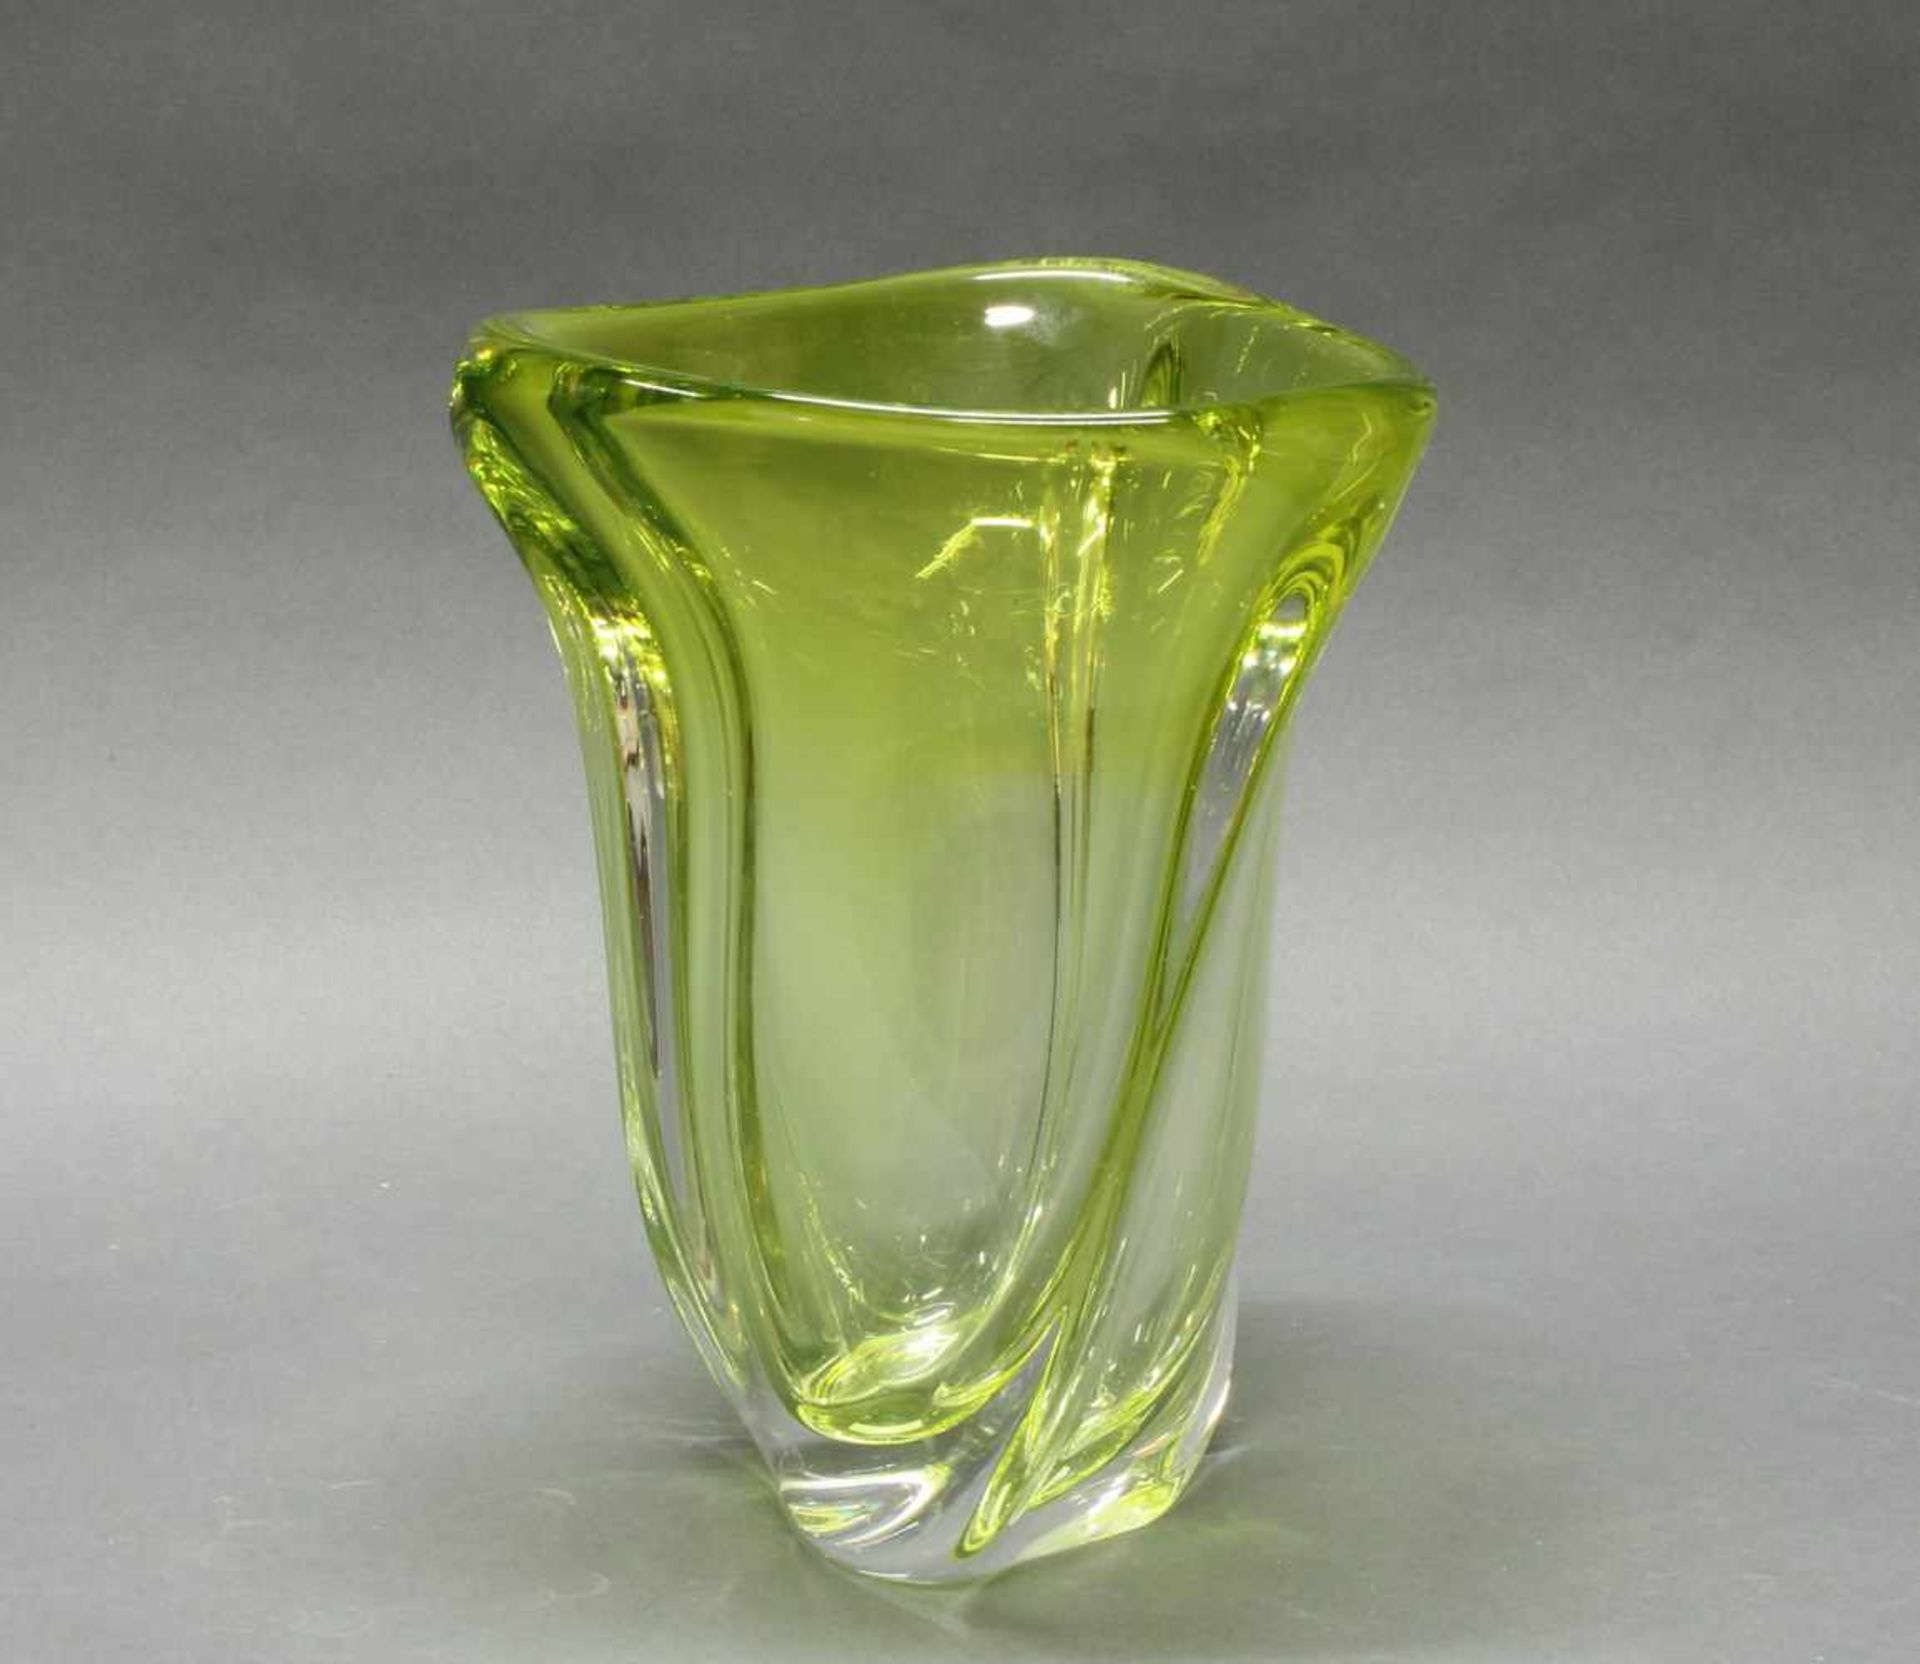 Vase, Belgien, 20. Jh., Val St. Lambert, Glas, hellgrün, dreiseitig gedrehte Form, 27 cm hoch